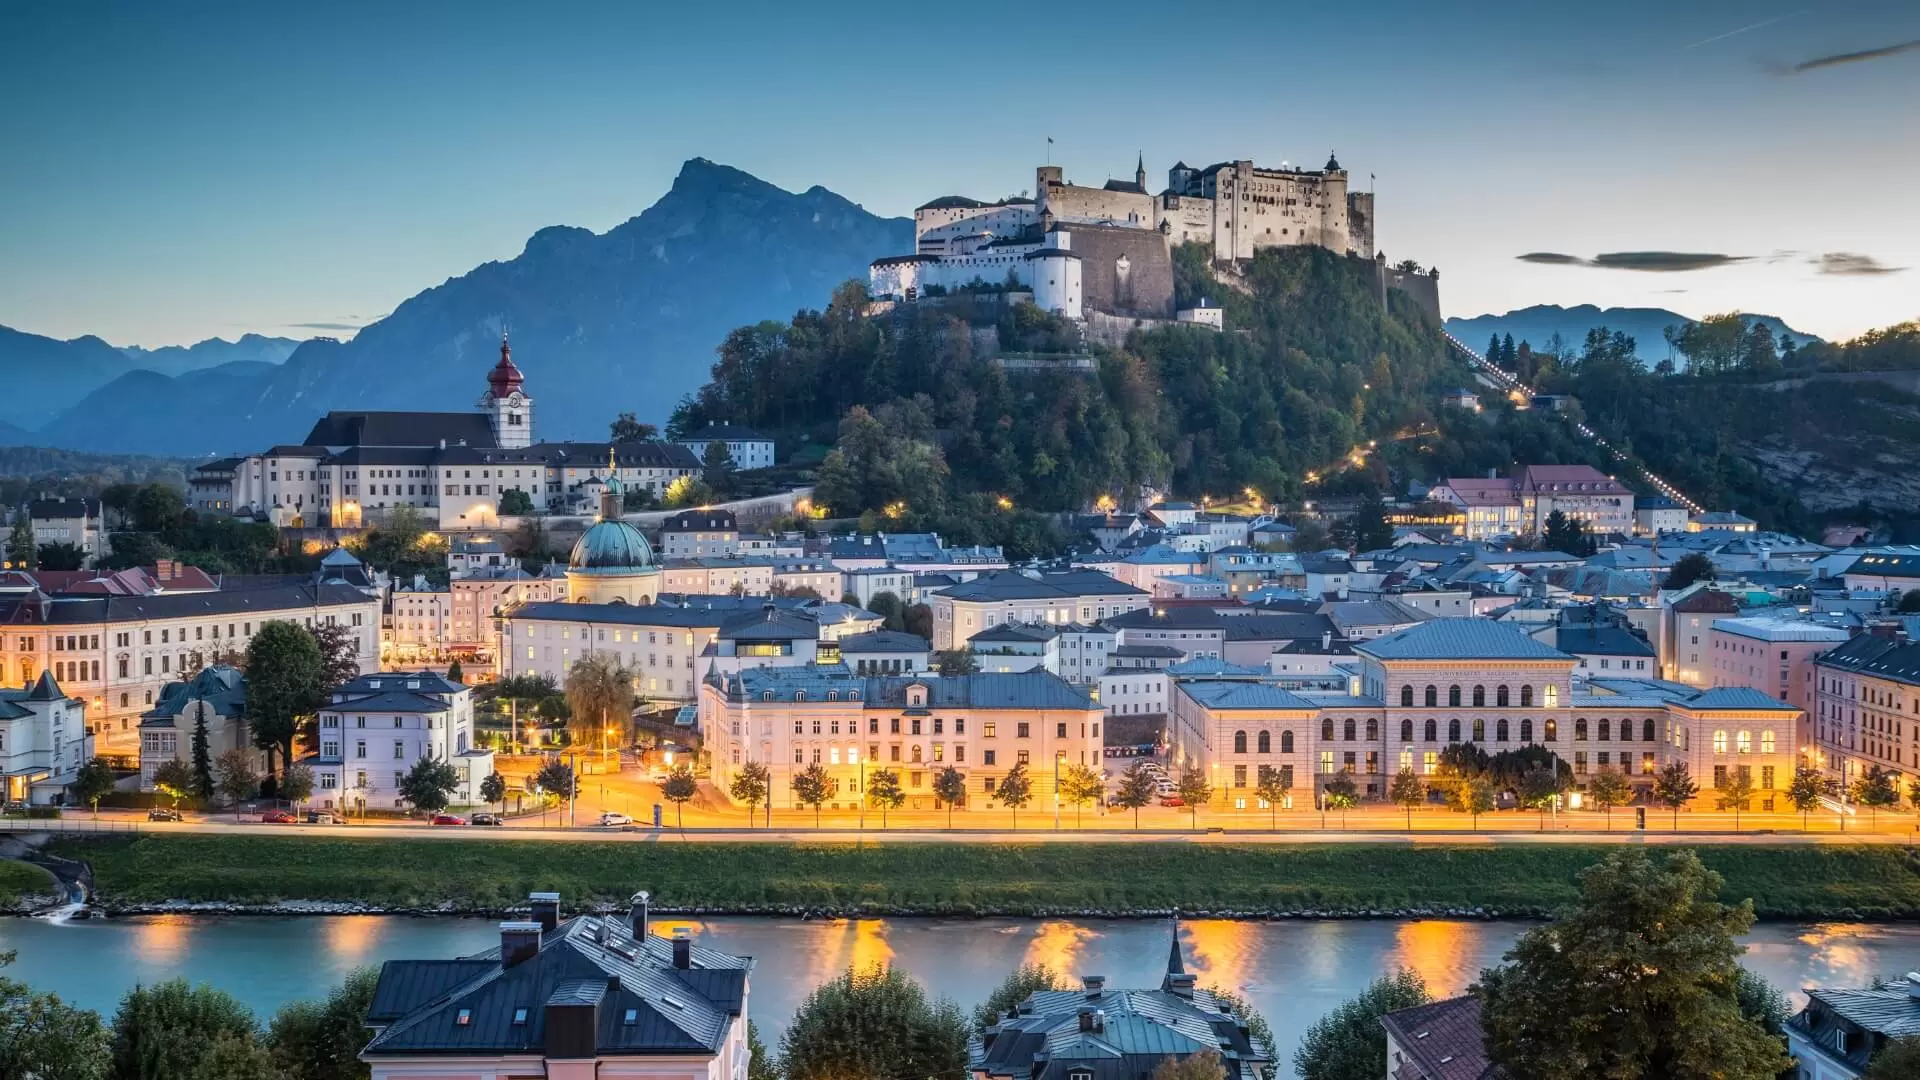 Destination: Salzburg, Austria